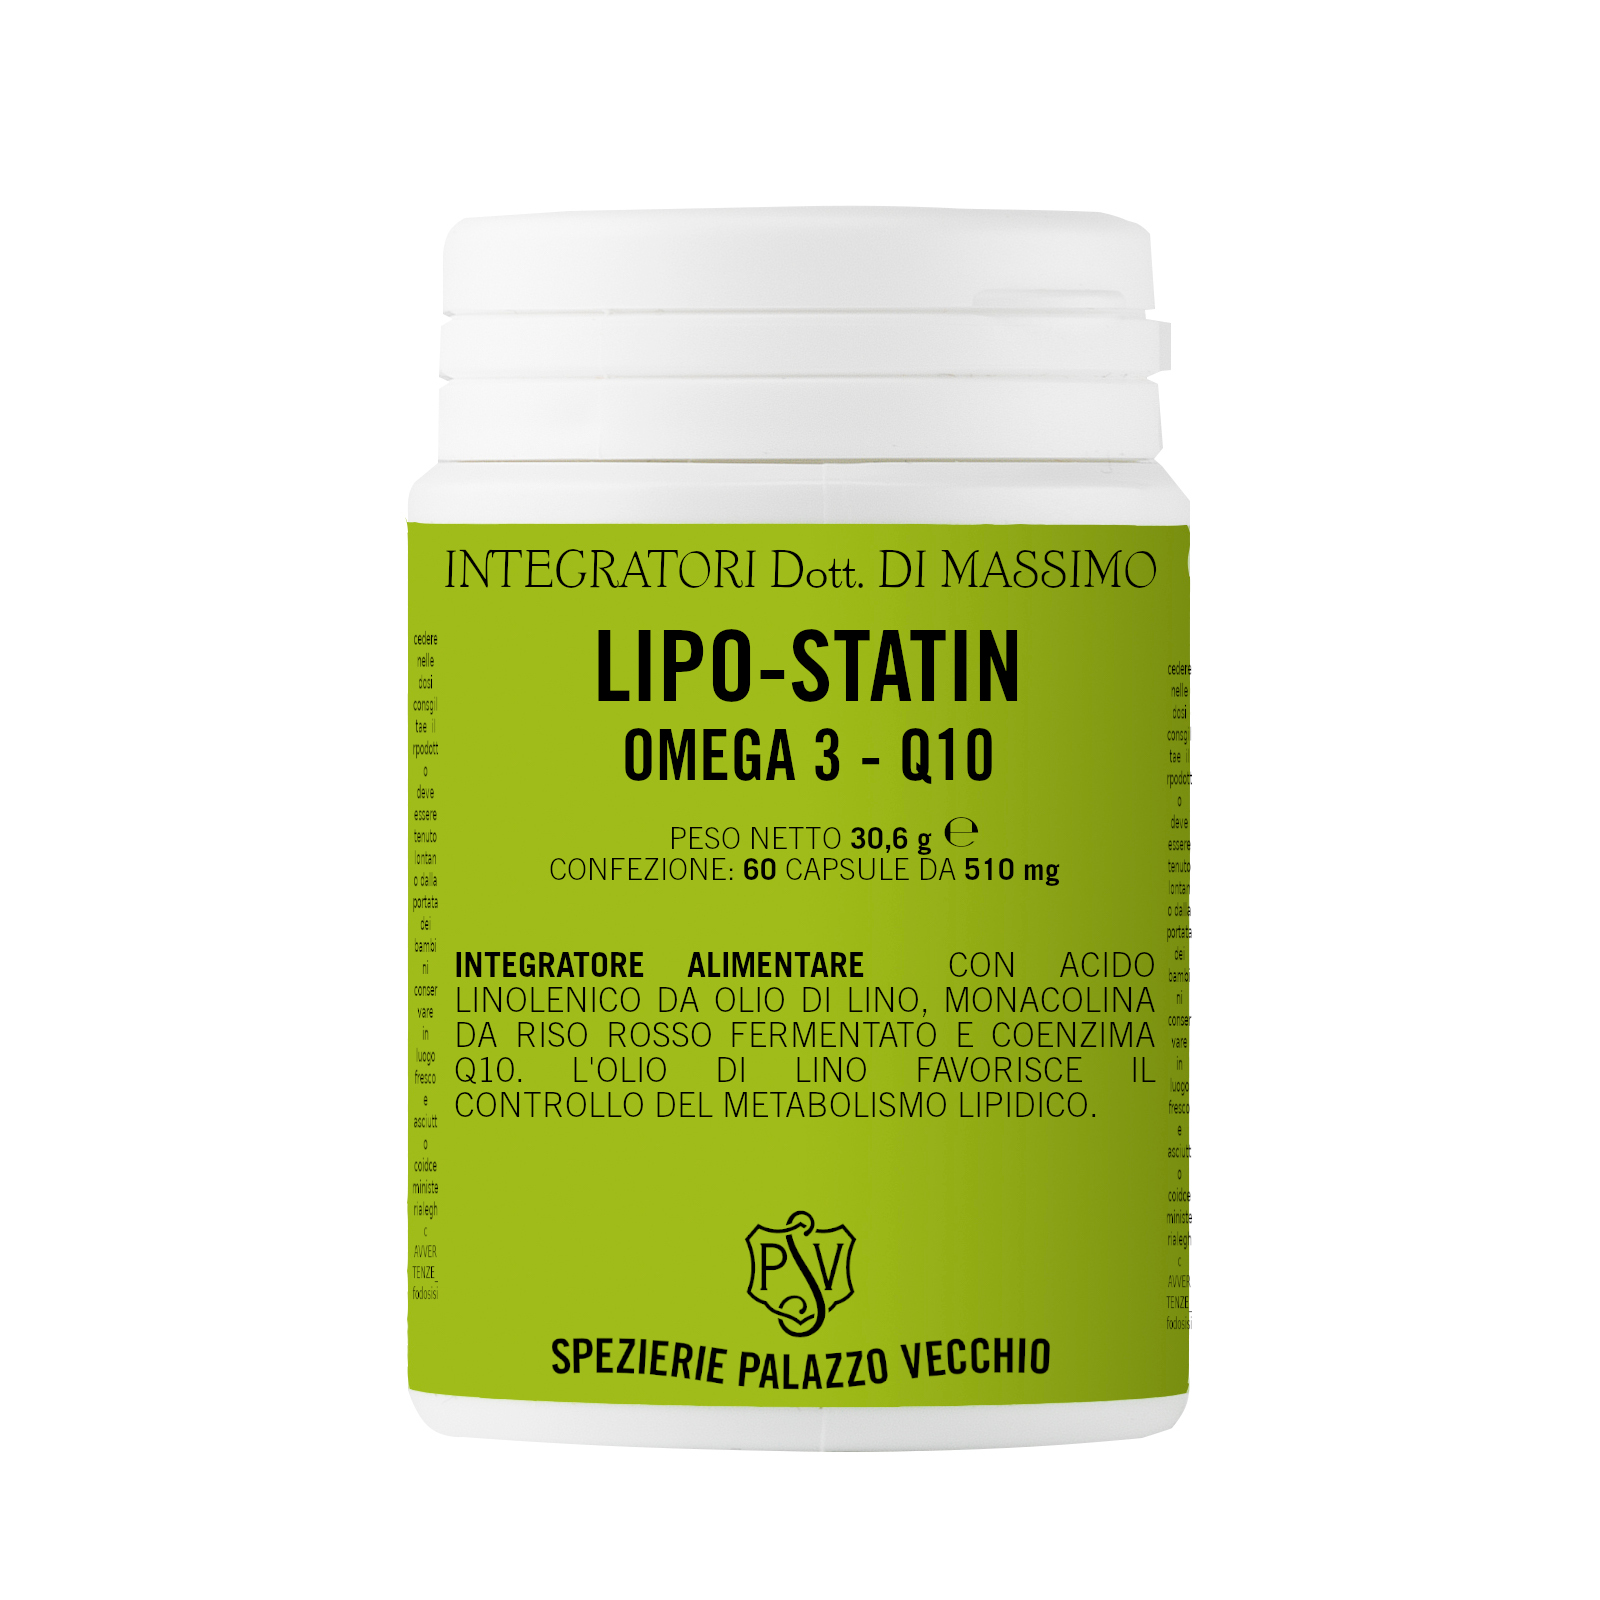 LIPOSTATIN Riso rosso fermentato-Omega3 -0